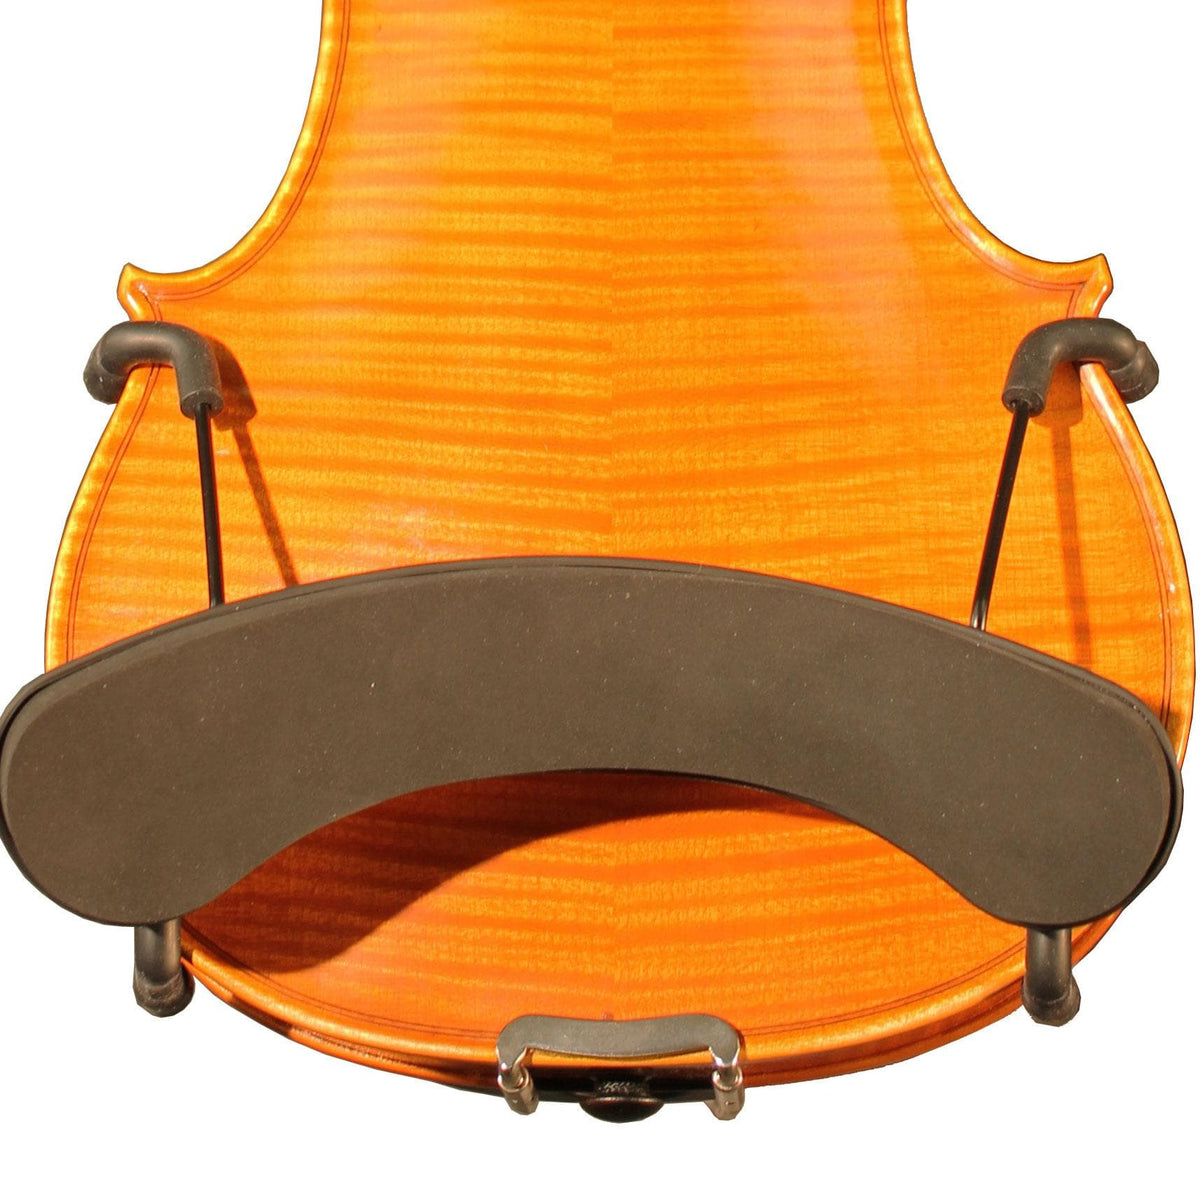 The Loft Sponge Shoulder Rest - The Loft Violin Shop